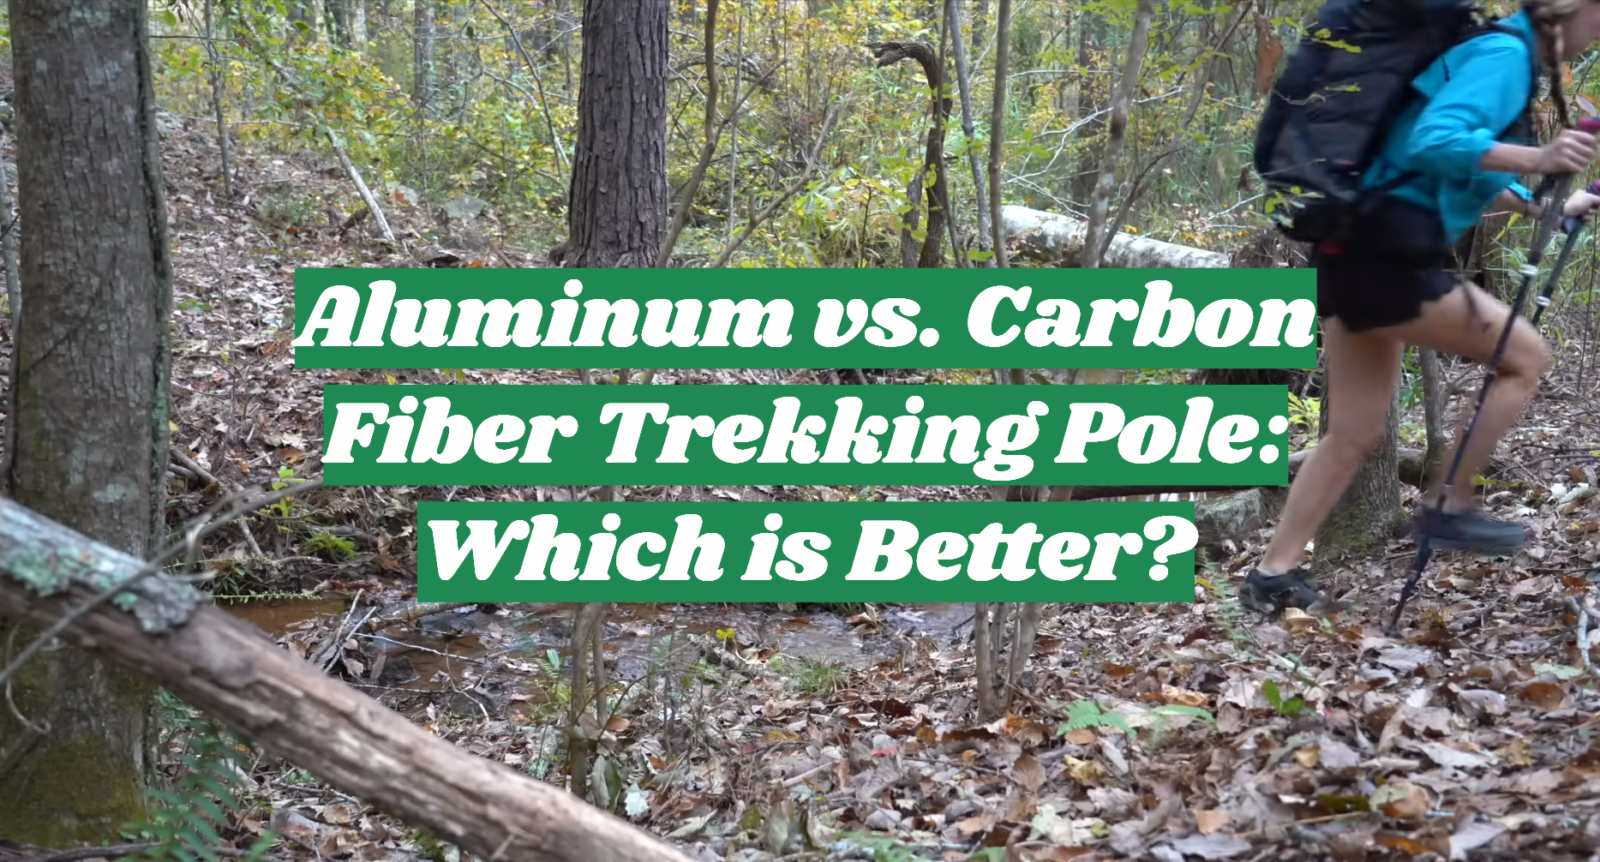 Aluminum vs. Carbon Fiber Trekking Pole: Which is Better?